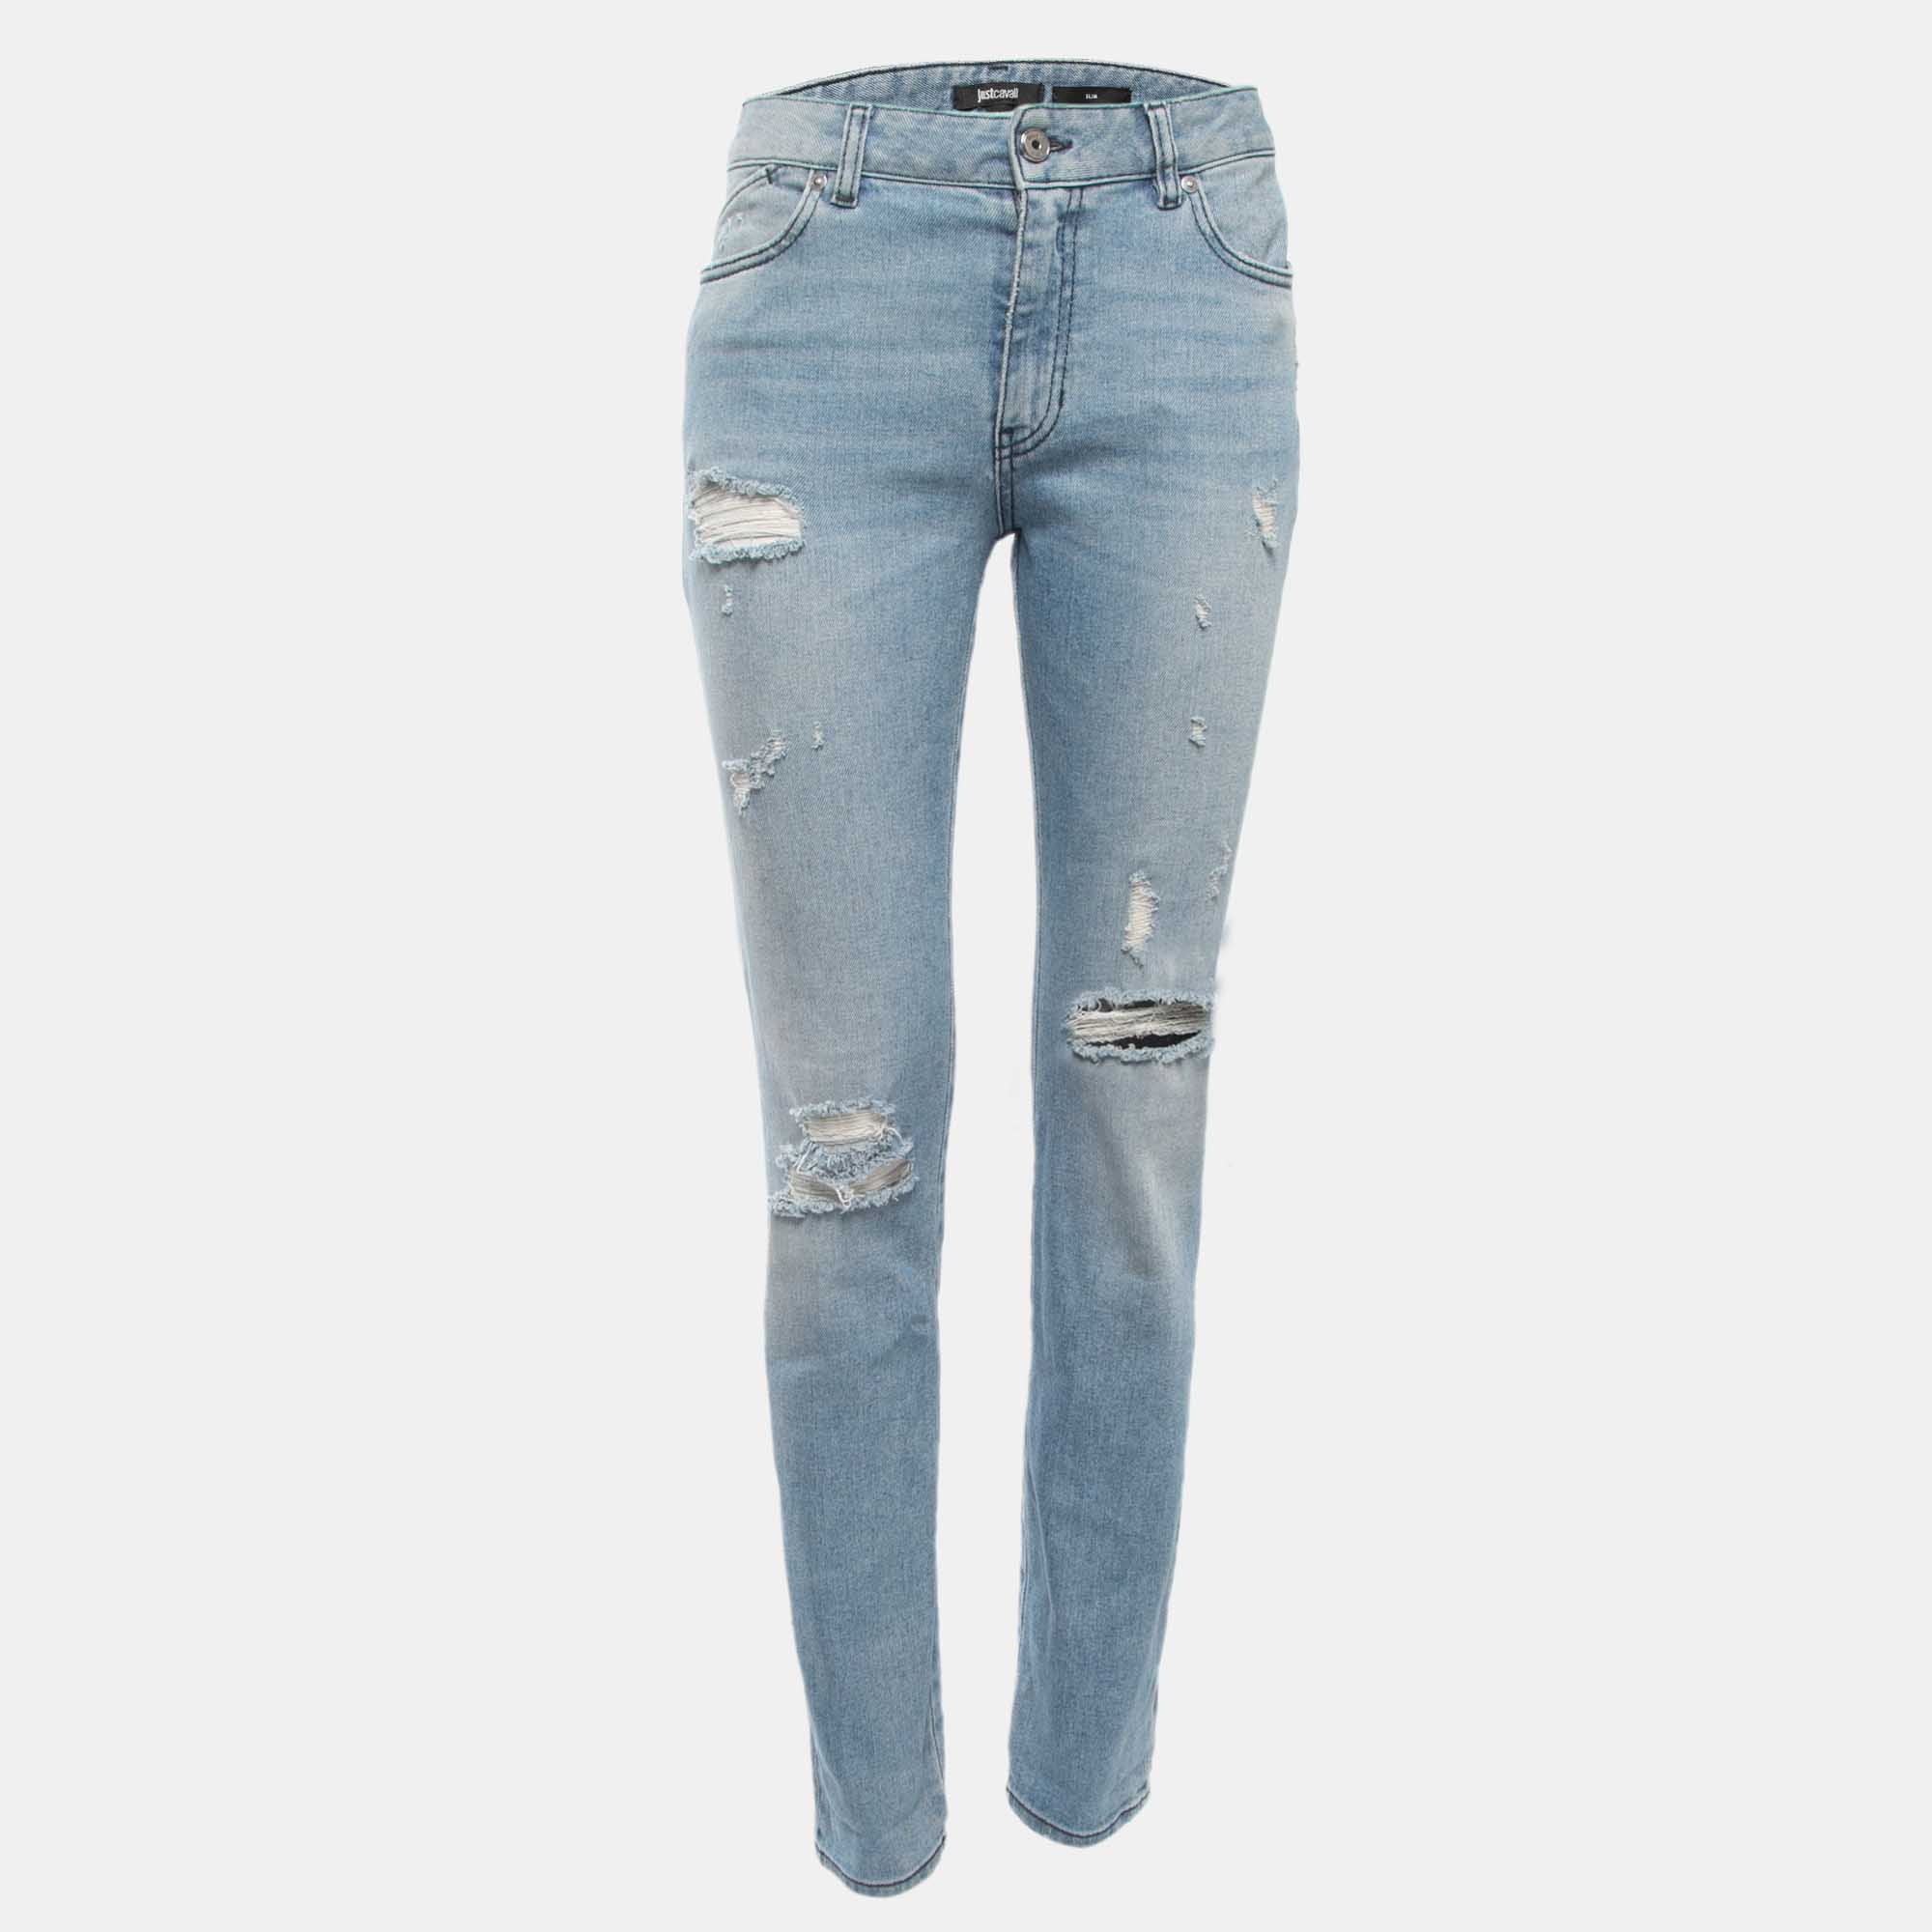 Pre-owned Just Cavalli Blue Distressed Denim Slim Fit Jeans M Waist 29"